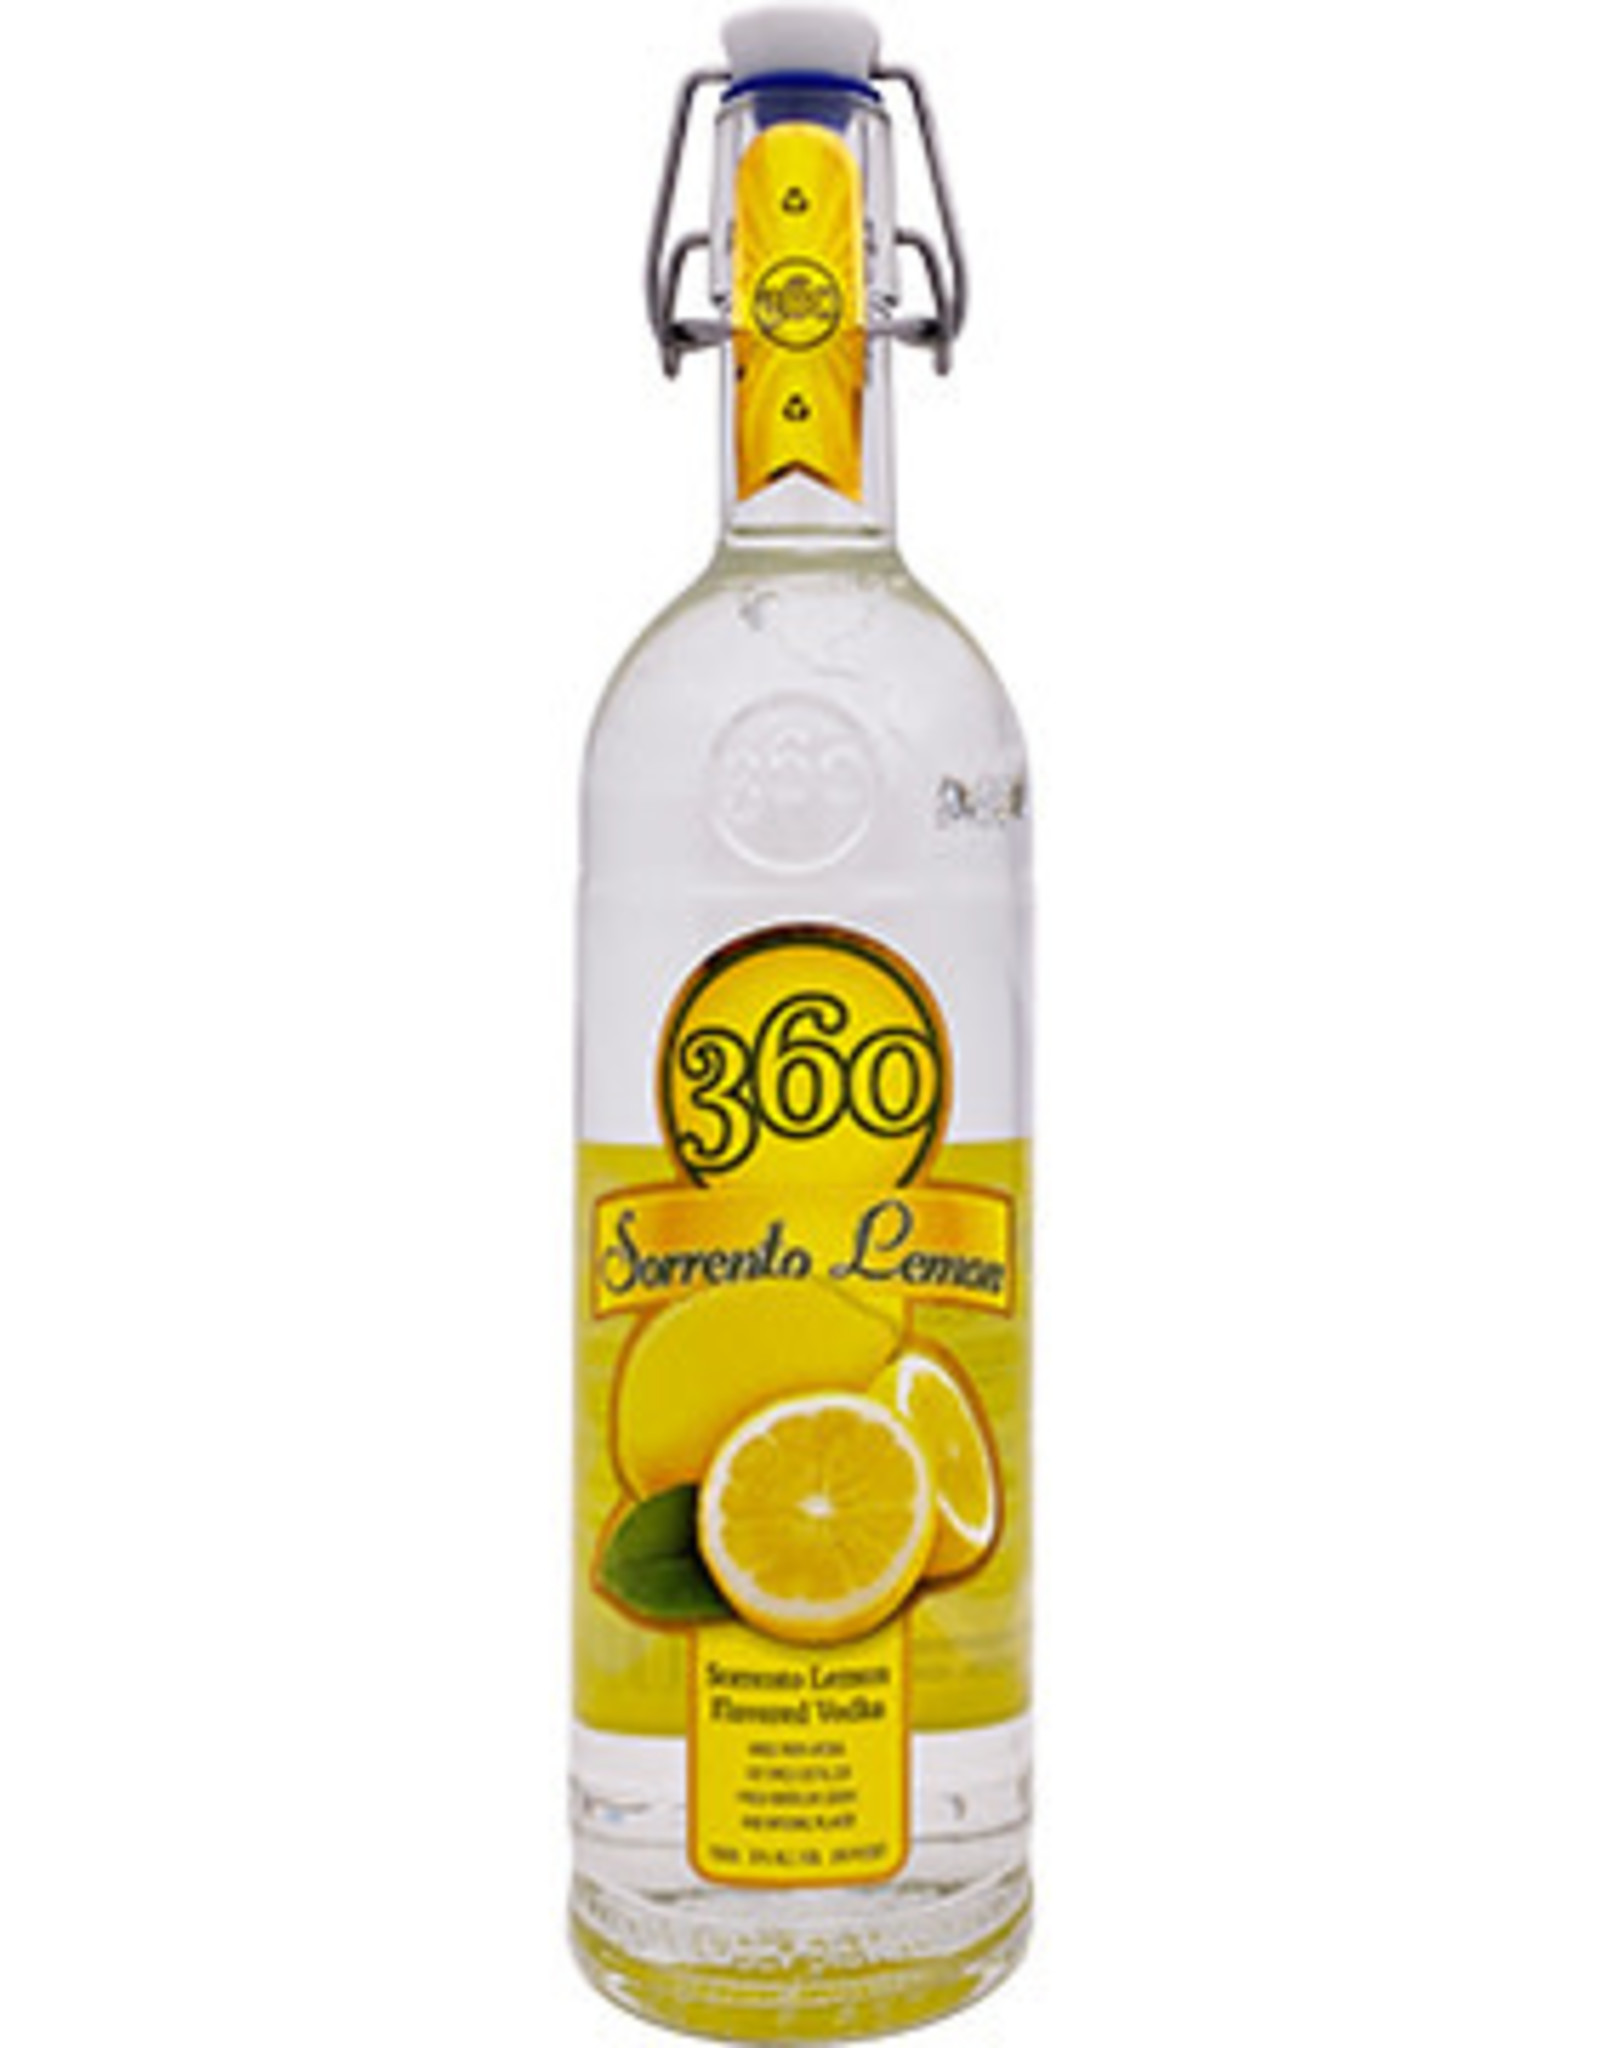 360 Vodka 360 Sorrento Lemon Vodka One L